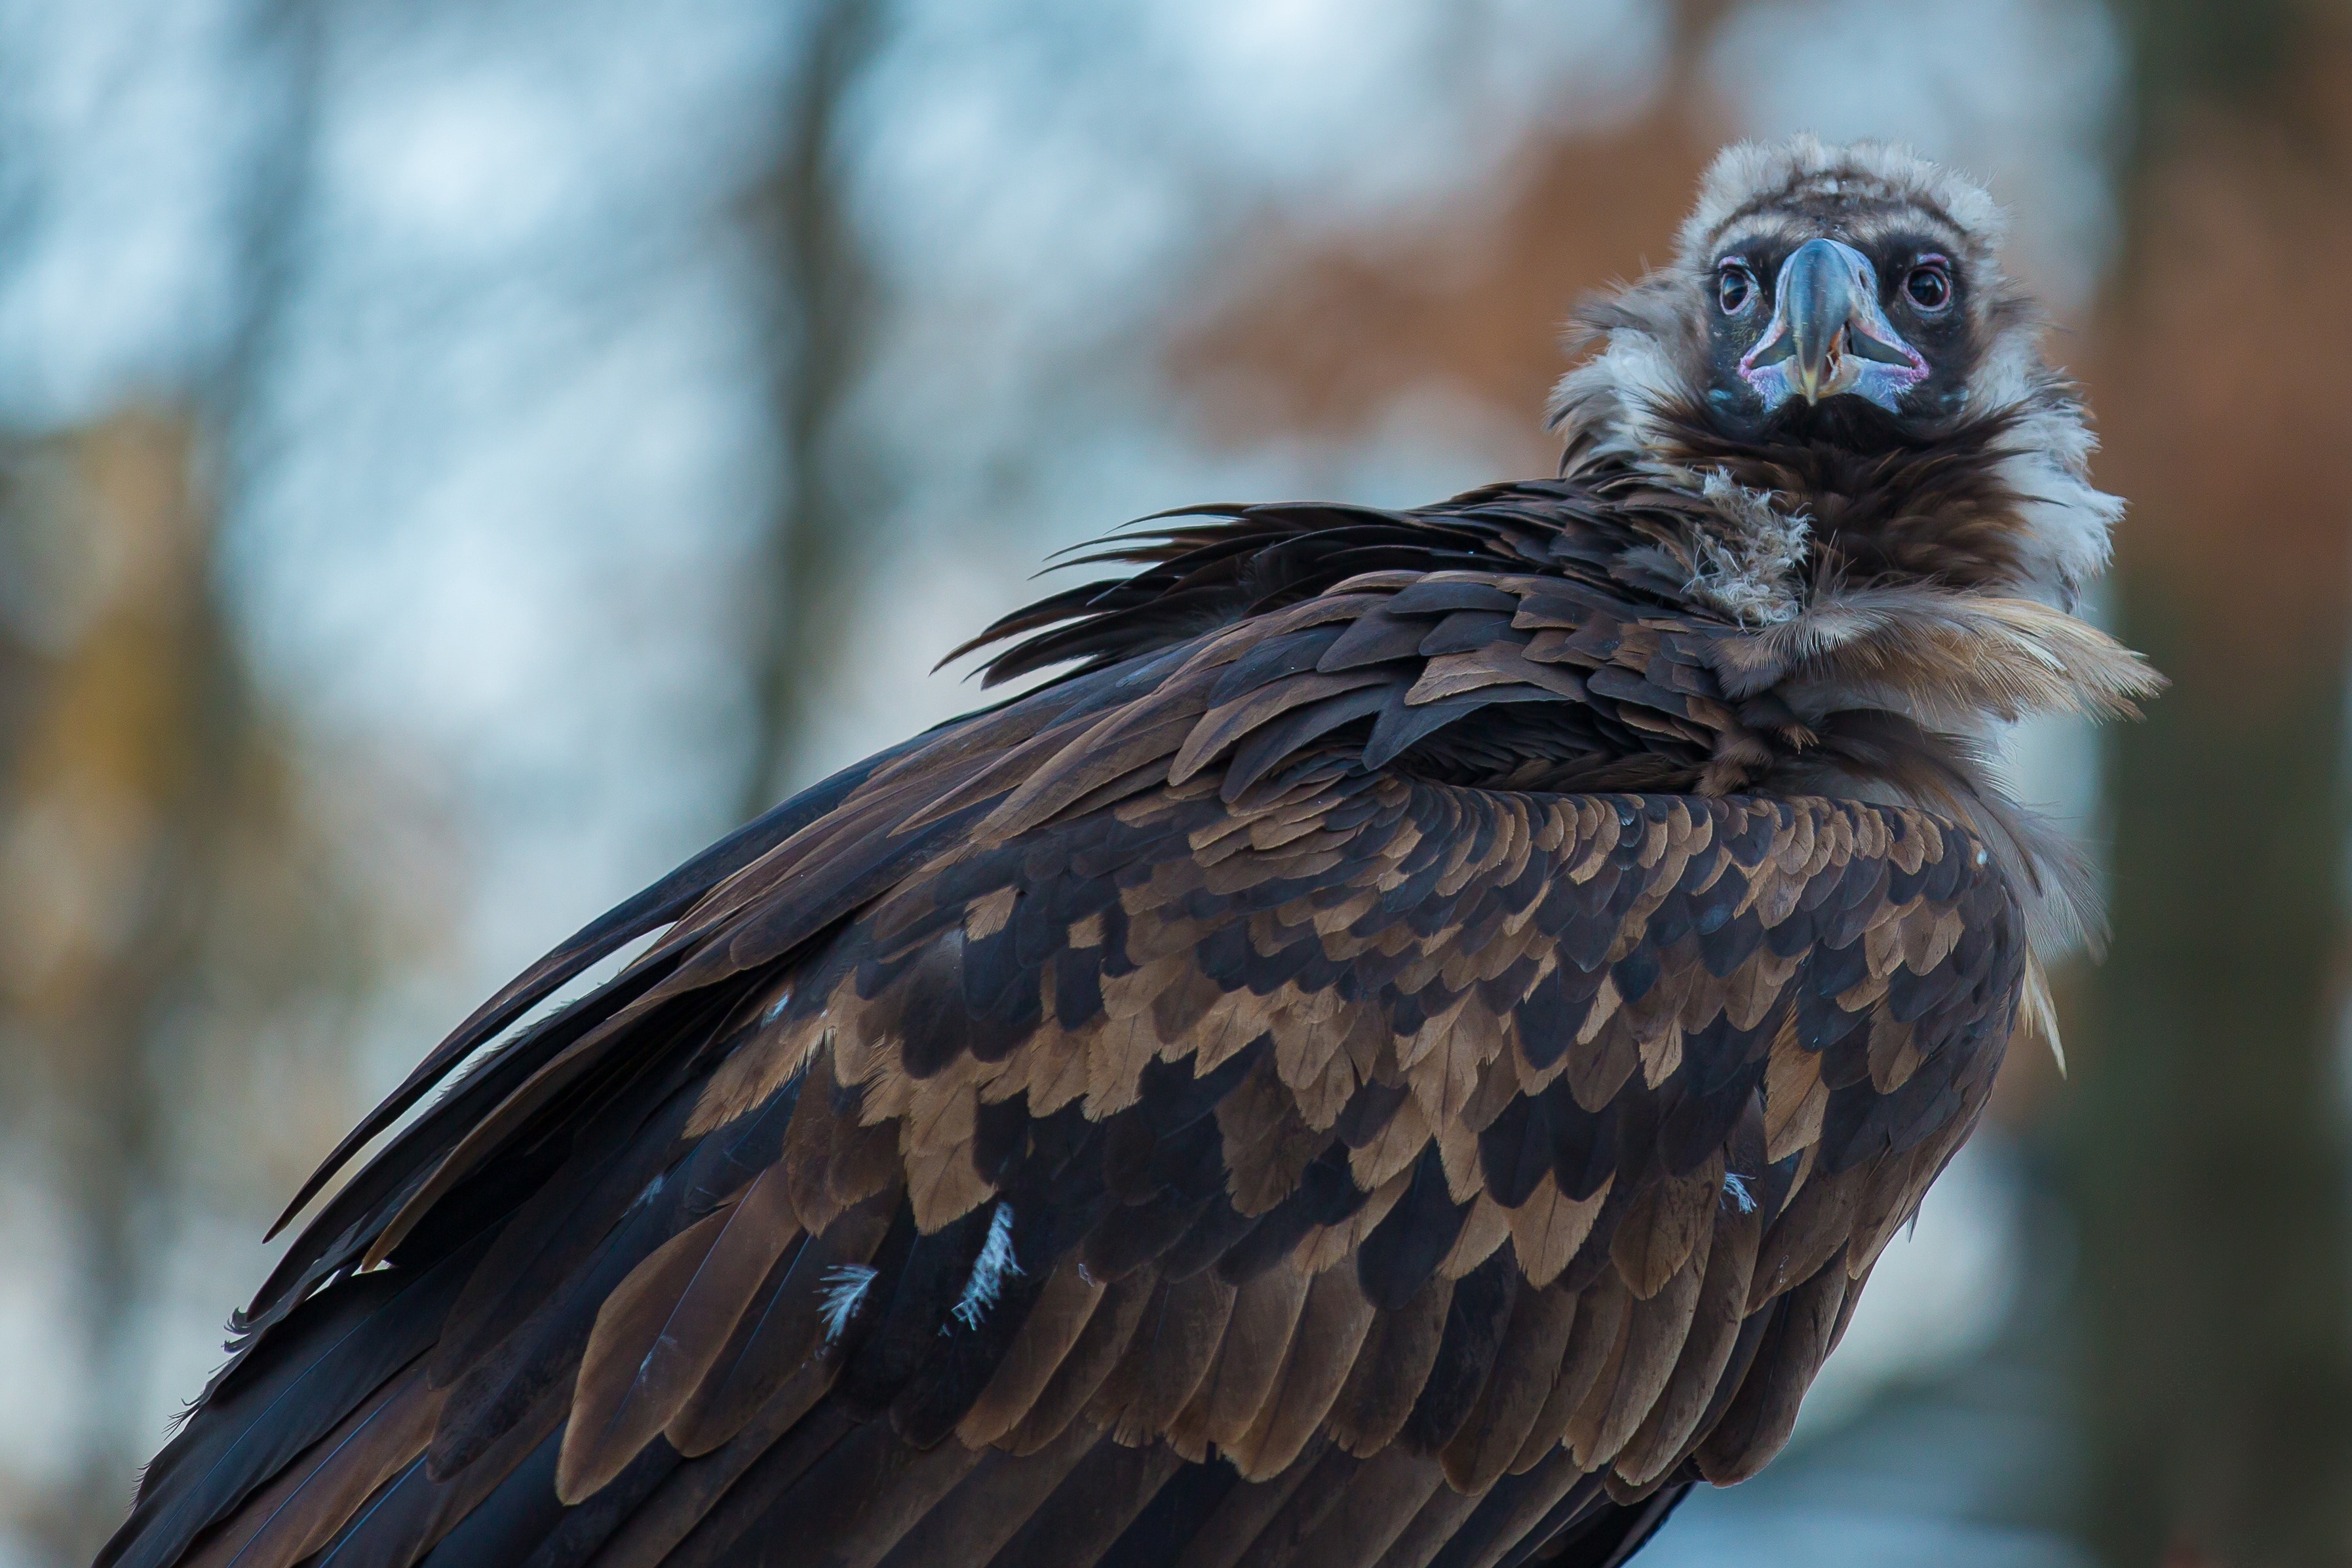 Black Vulture, Vulture, Scavengers, one animal, animal wildlife